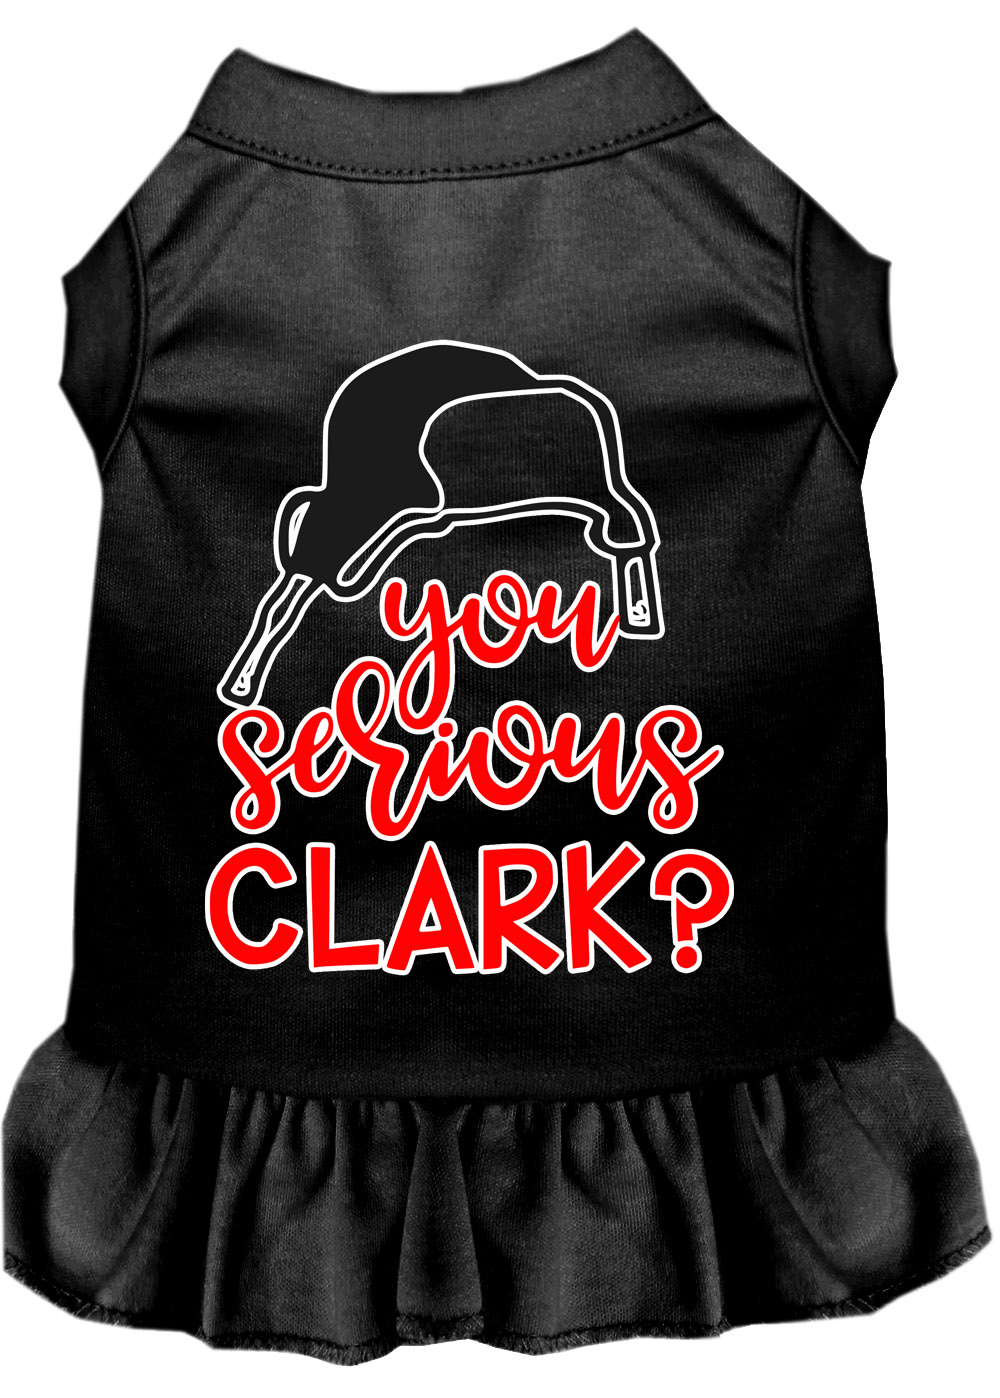 You Serious Clark? Screen Print Dog Dress Black XXXL